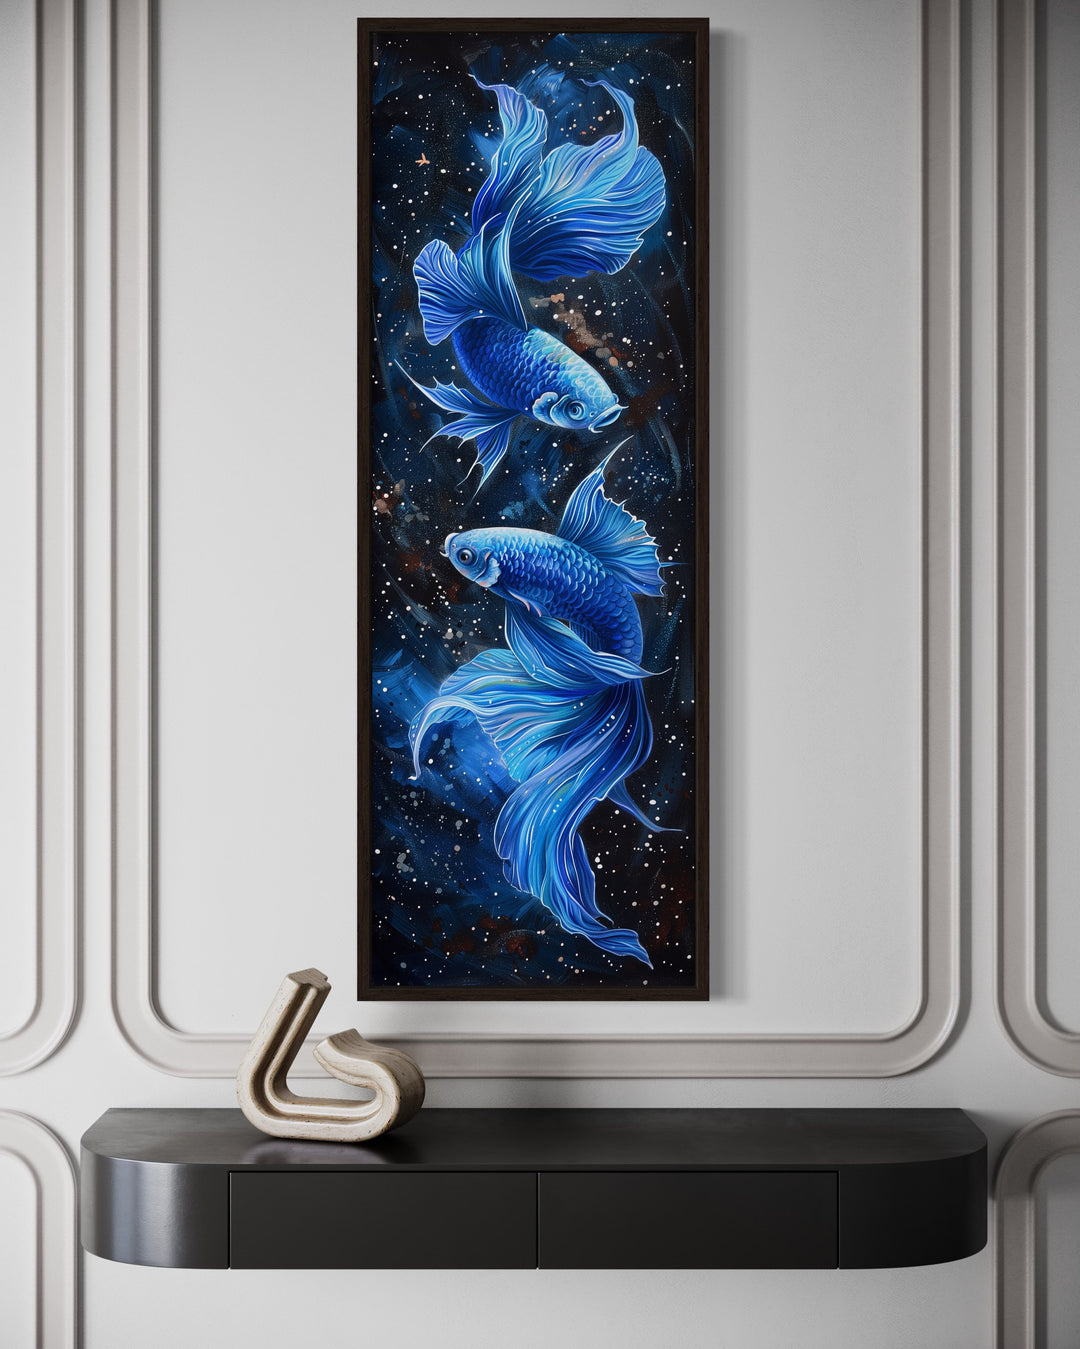 close up view of Tall Narrow Blue Betta Fish On Black Vertical Wall Art "Sapphire Swirl"